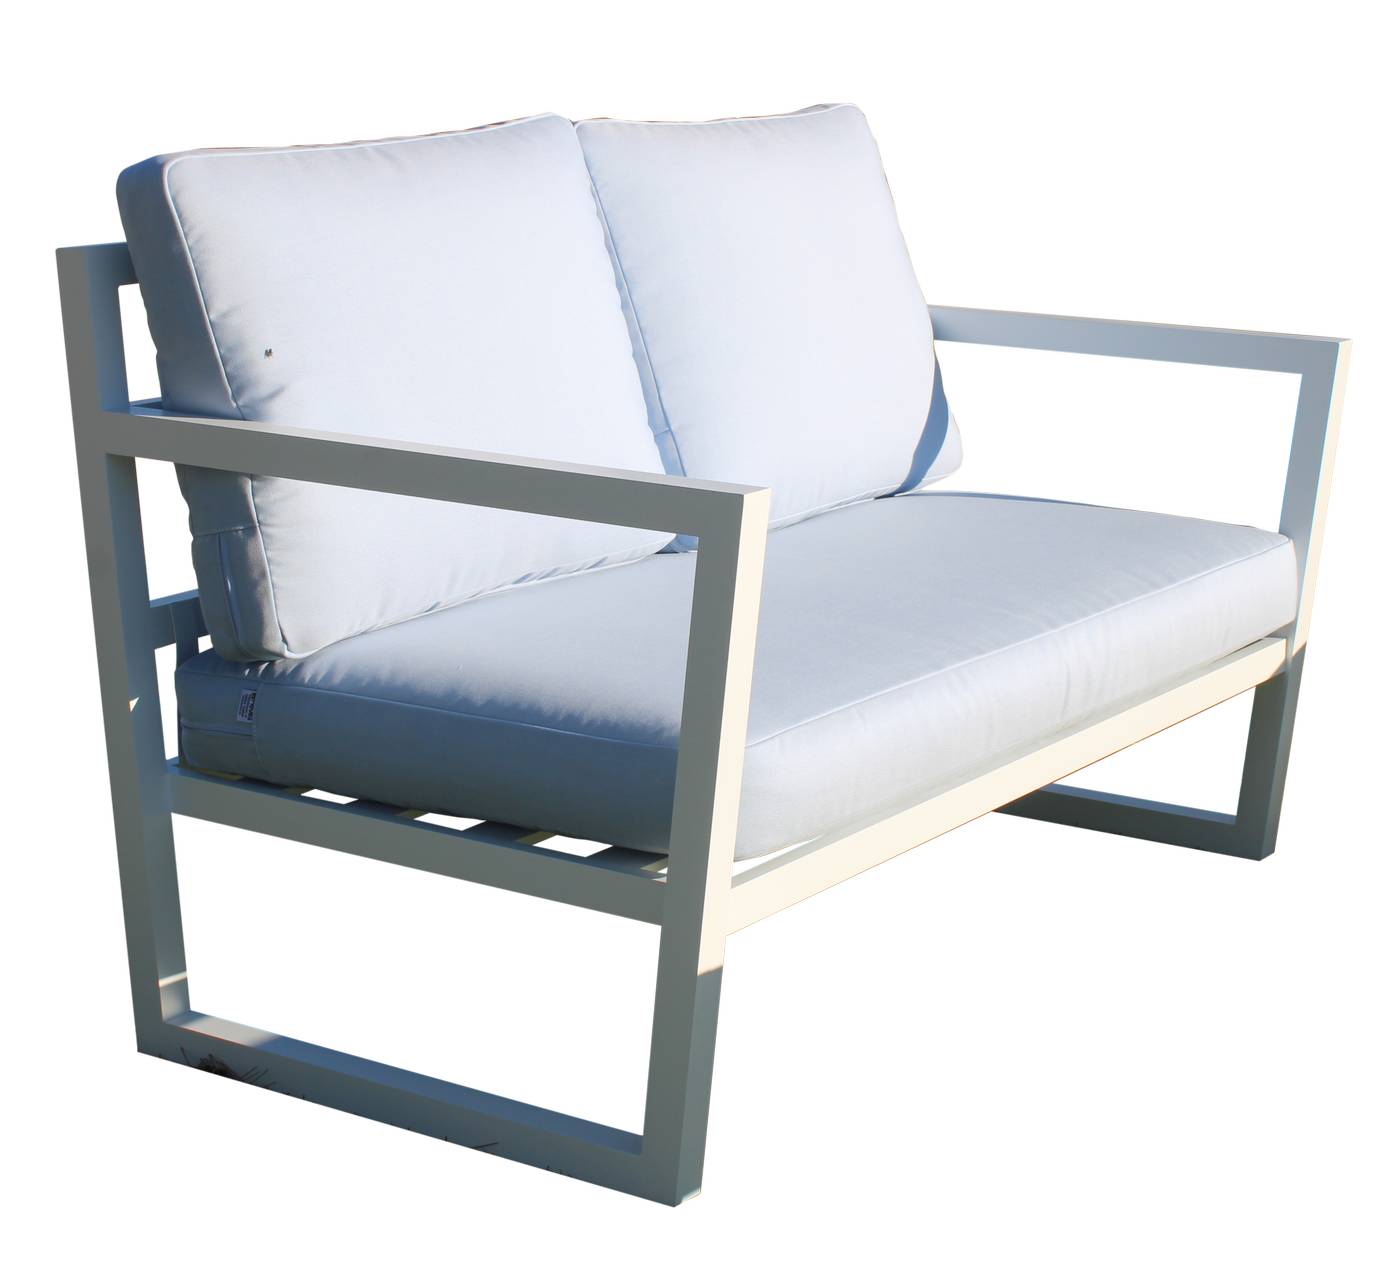 Set Aluminio Piona-9 - Conjunto de aluminio para exterior: sofá 2 plazas + 2 sillones + mesa de centro + 2 taburetes. Disponible en cinco colores diferentes.